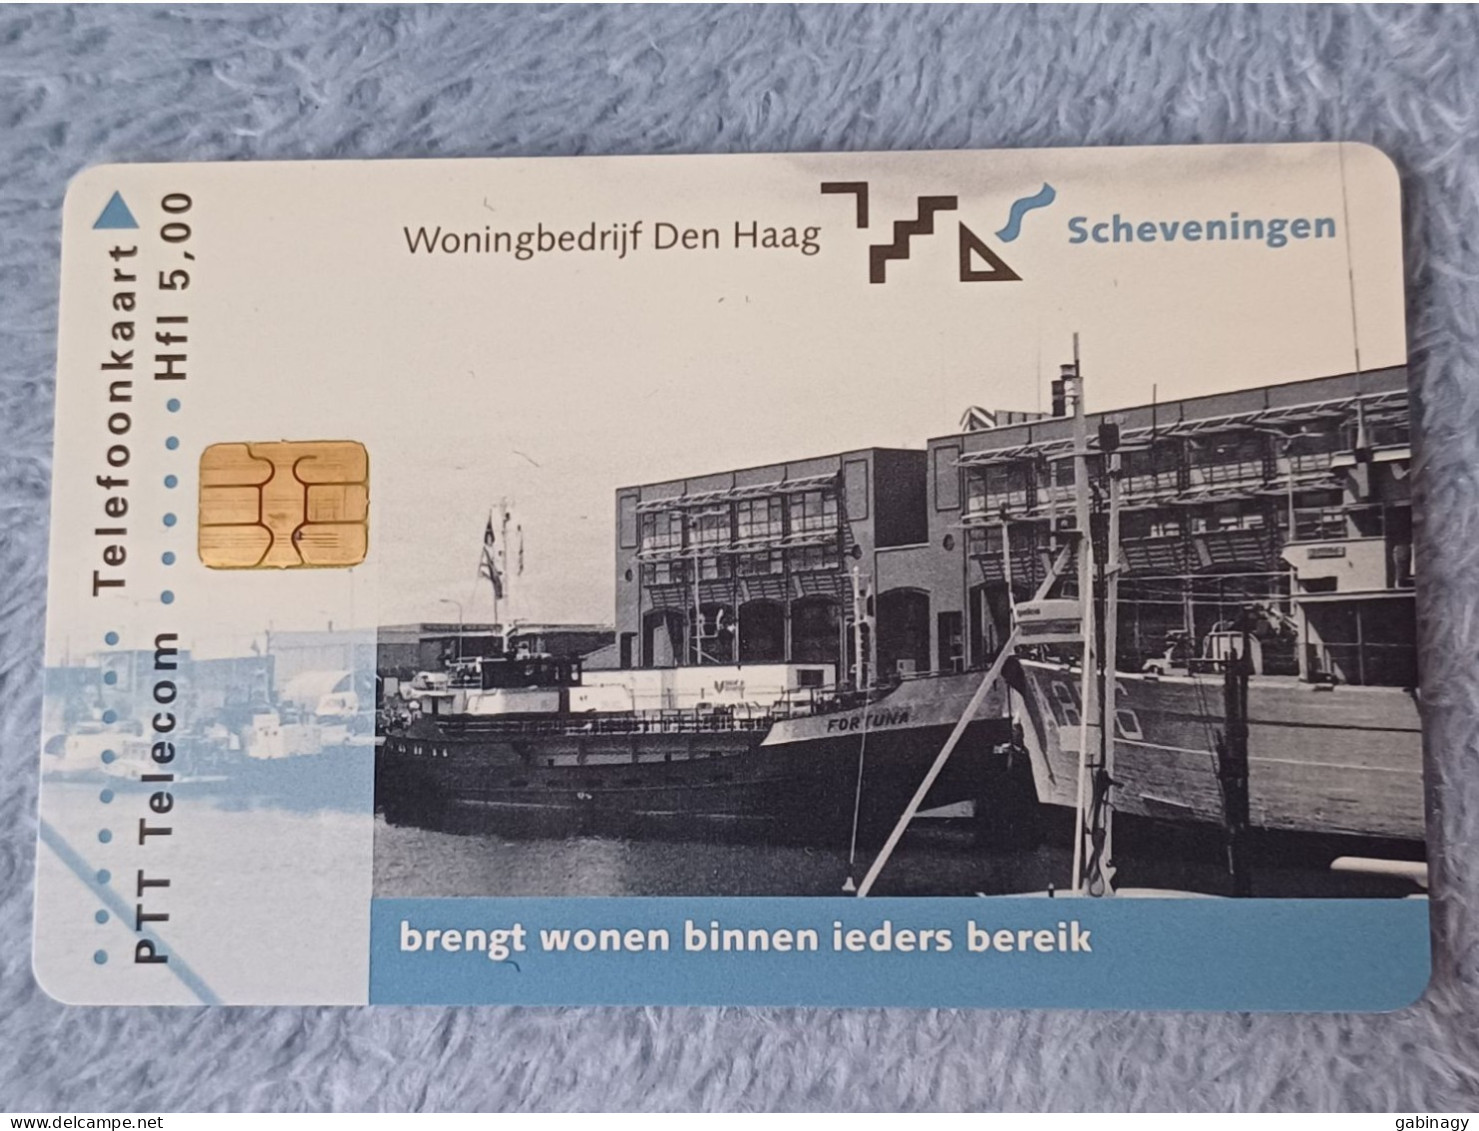 NETHERLANDS - CRD370 - Woningbedrijf Den Haag Scheveningen - 1.000EX. - Privat